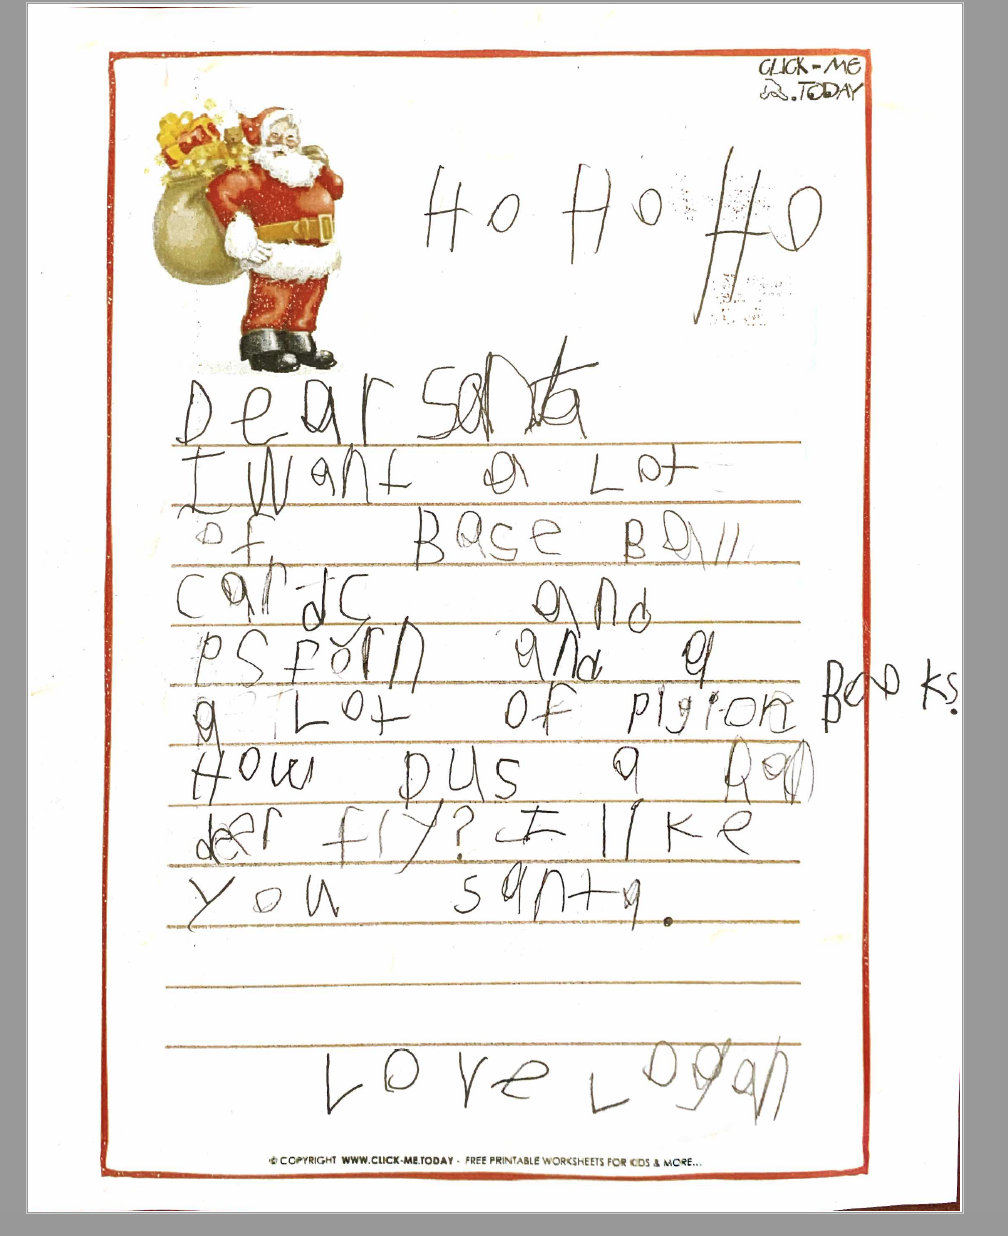 Logan's letter